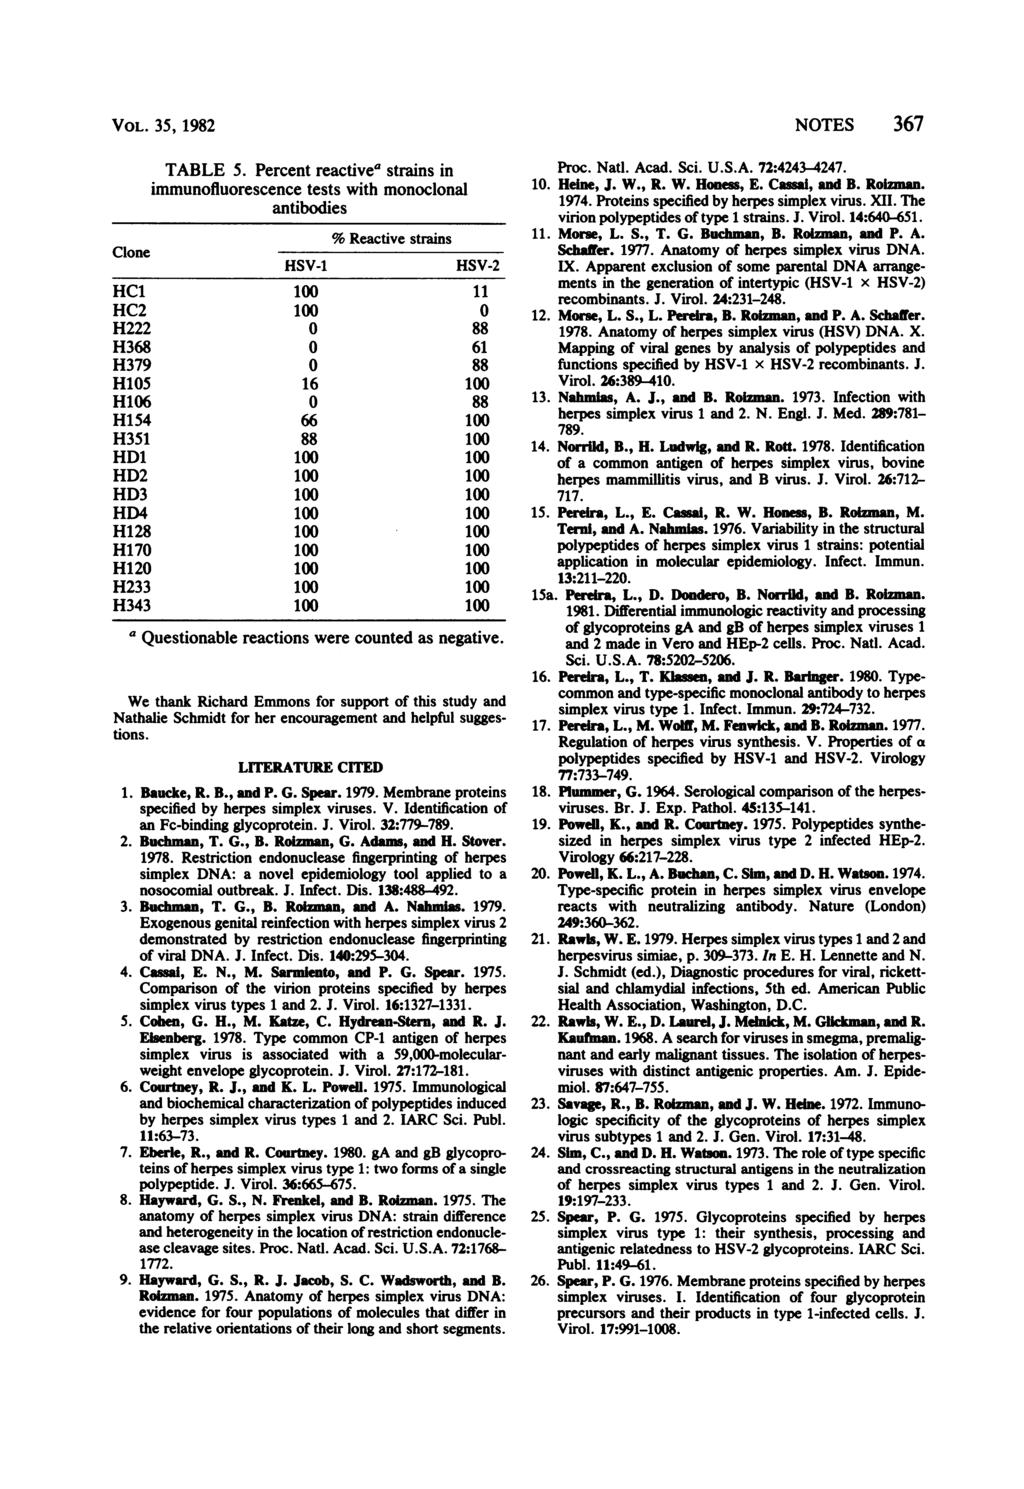 VOL. 35, 1982 TABLE 5.